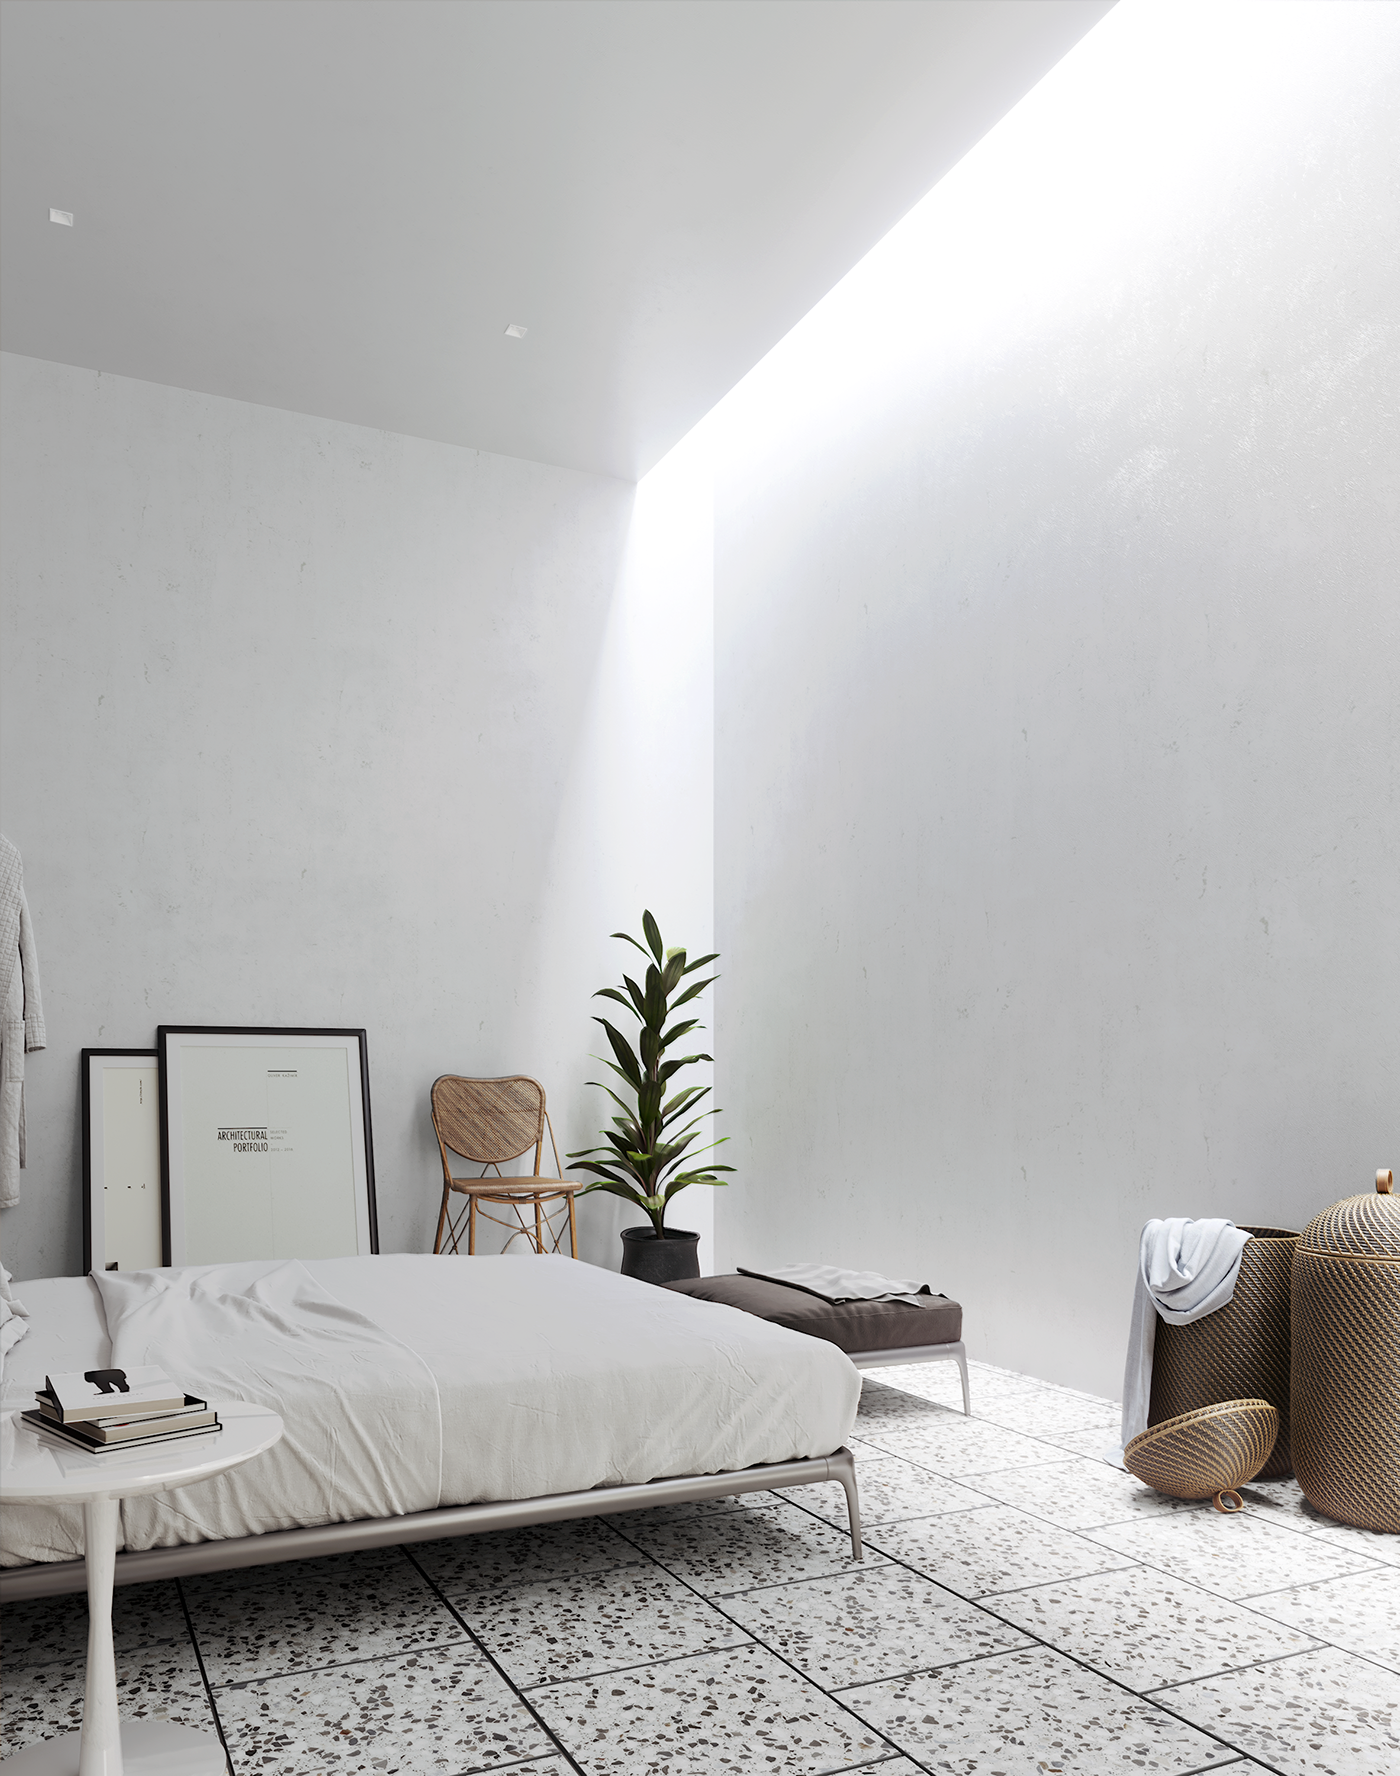 CGI Render bedroom interiordesign corona visualization